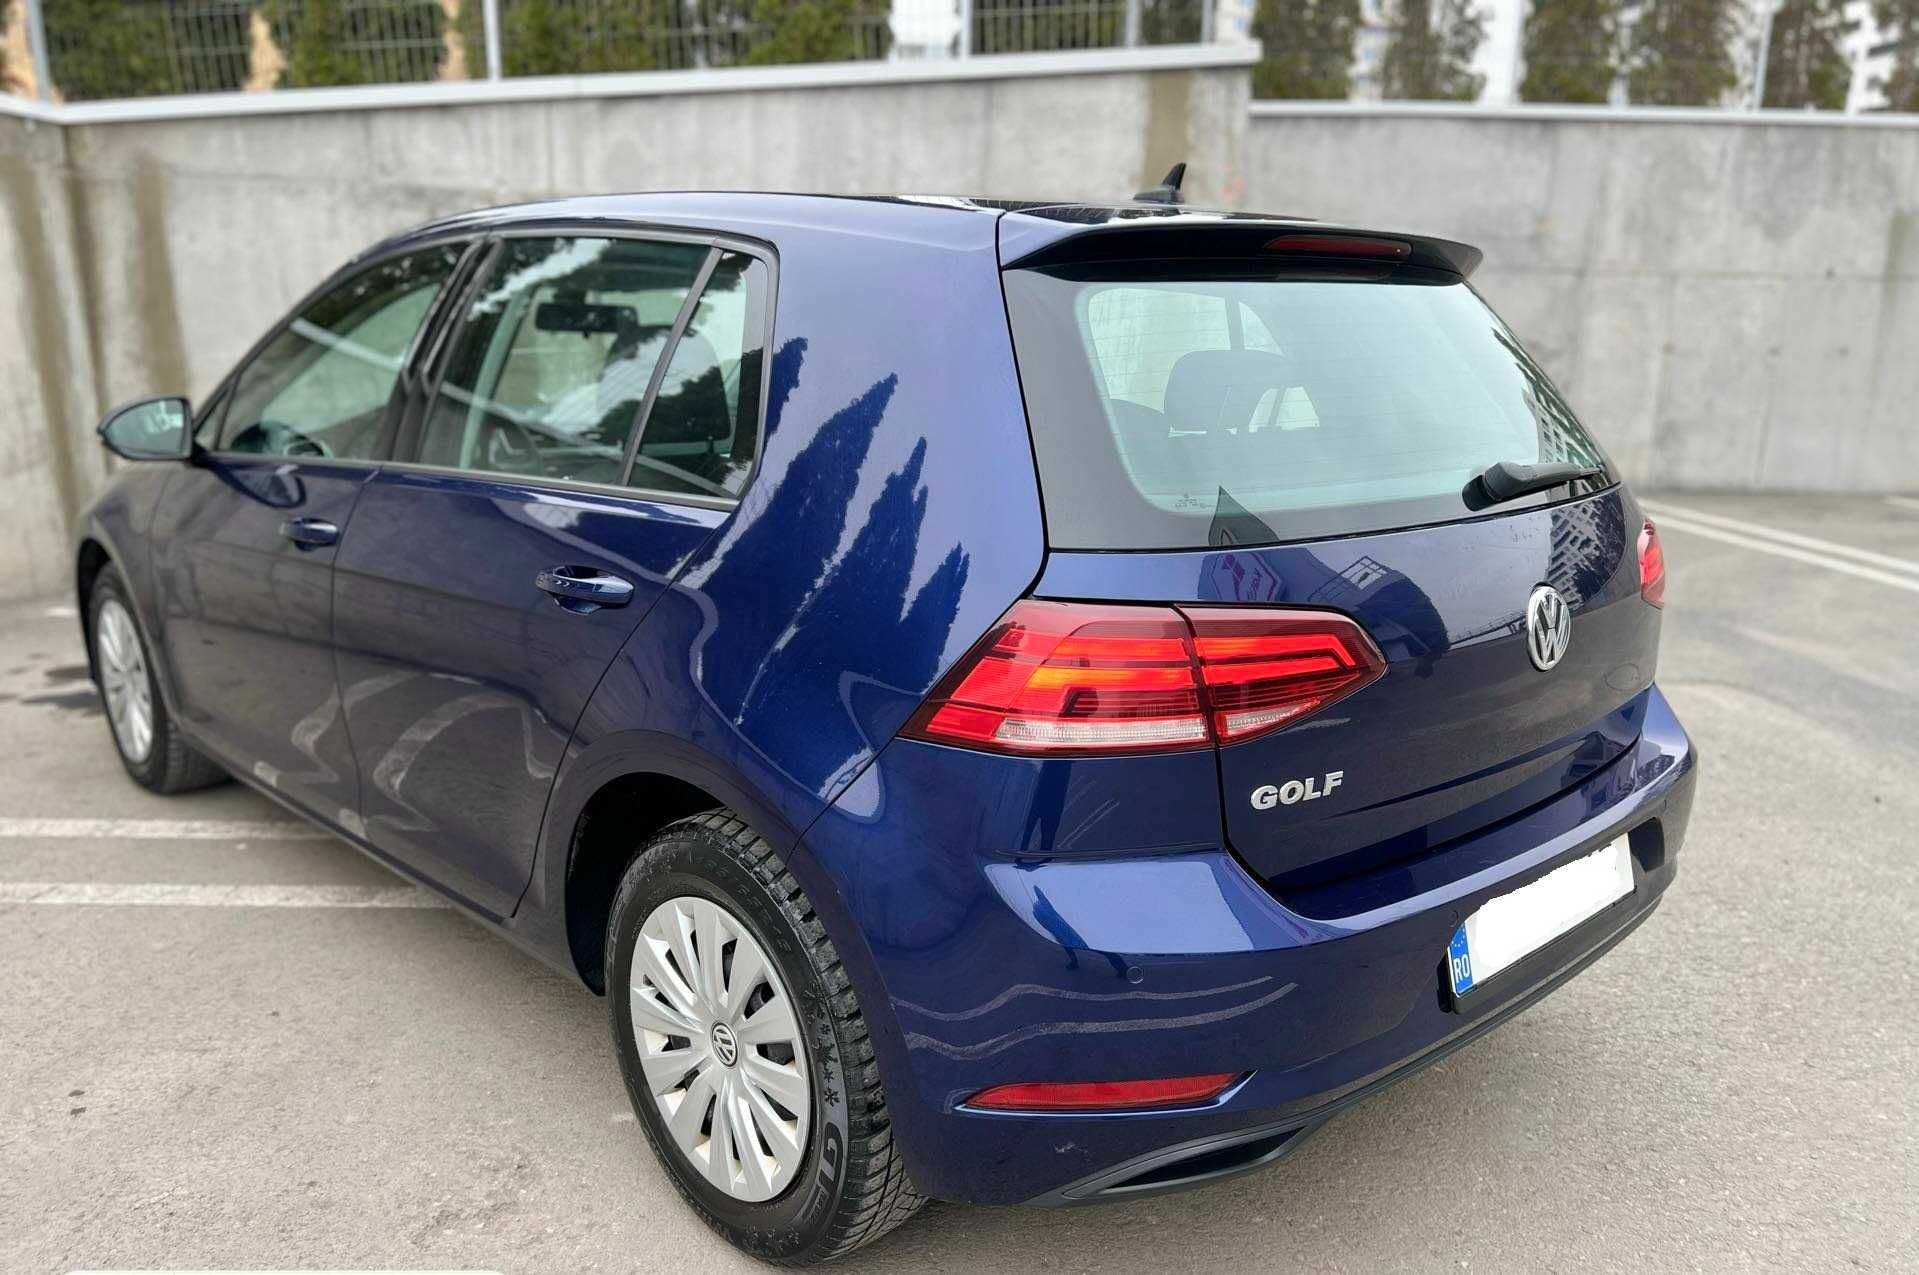 VW Golf 7 Model 2020/ Fara daune in istoric/ Km Reali 100% Garantati!!